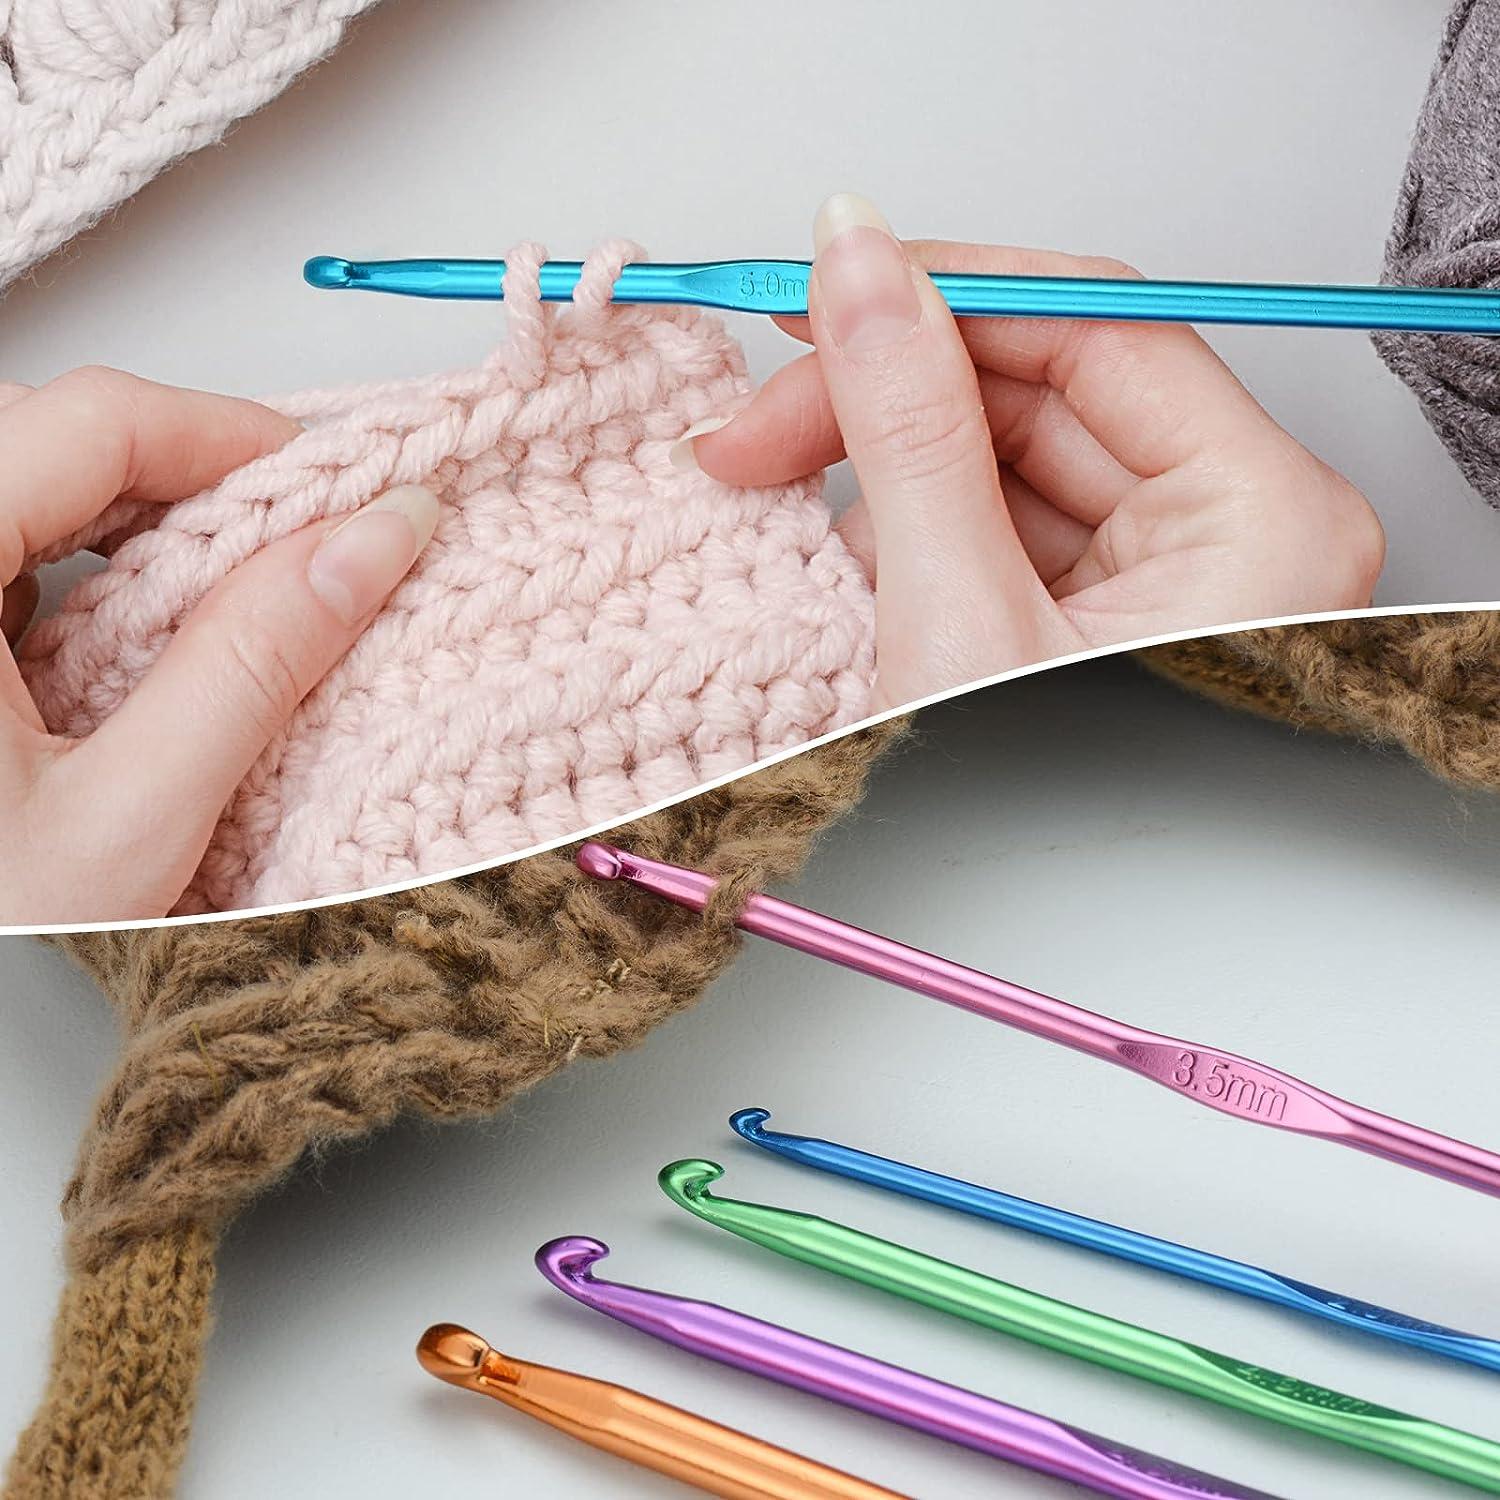  Knitting & Crochet Supplies - Knitting & Crochet Supplies:  Arts, Crafts & Sewing